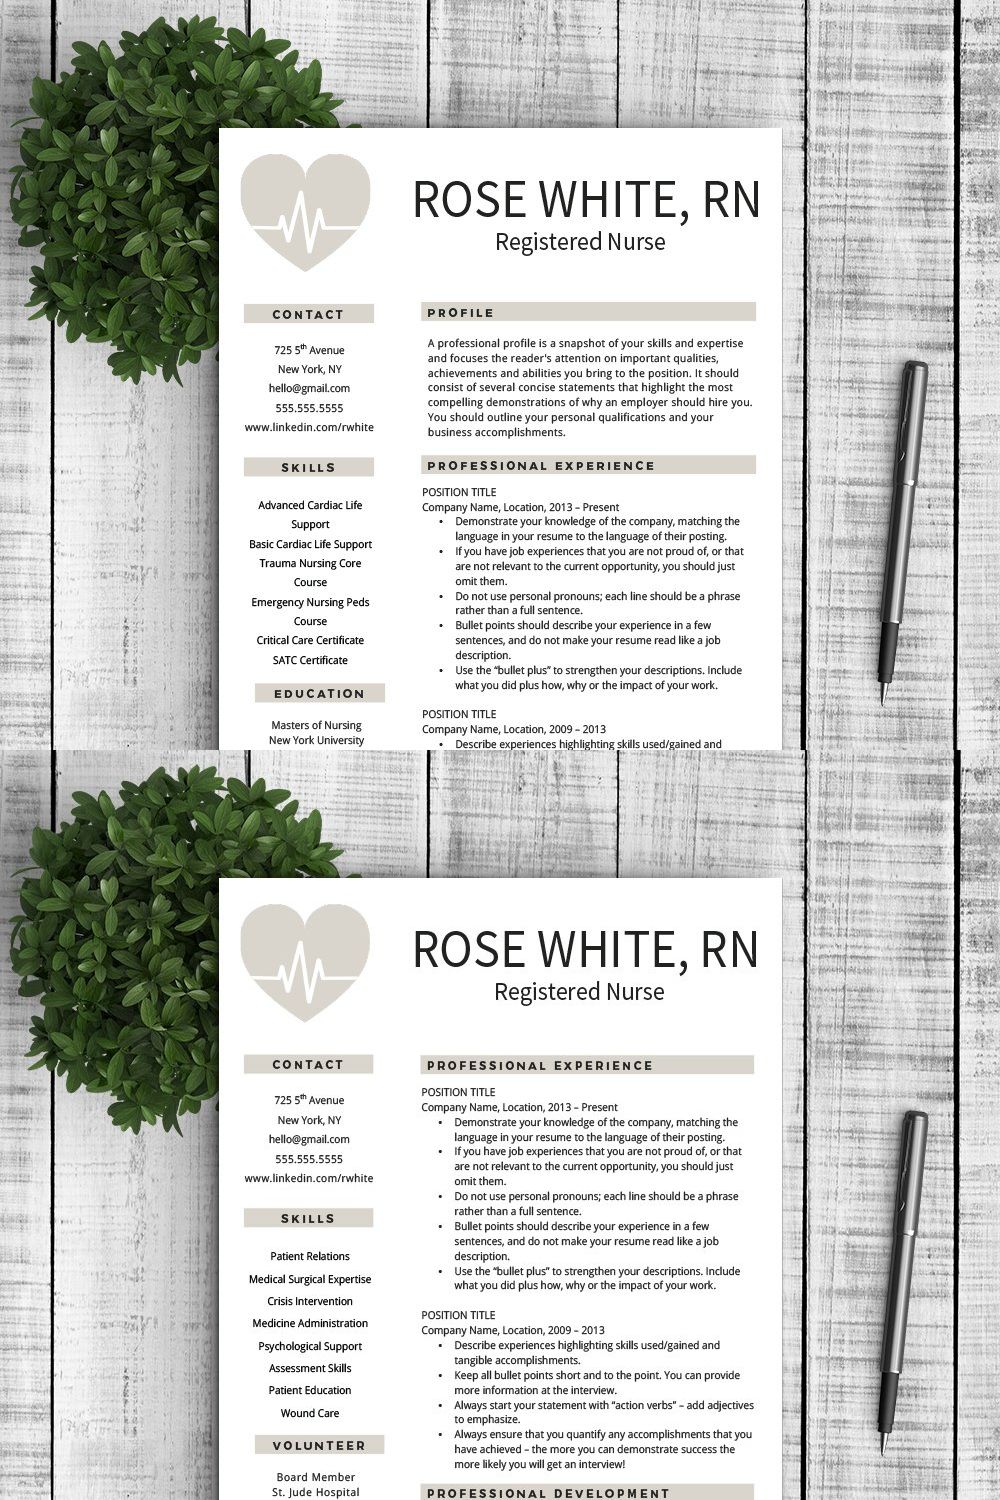 Resume & Cover Letter - Rose pinterest preview image.